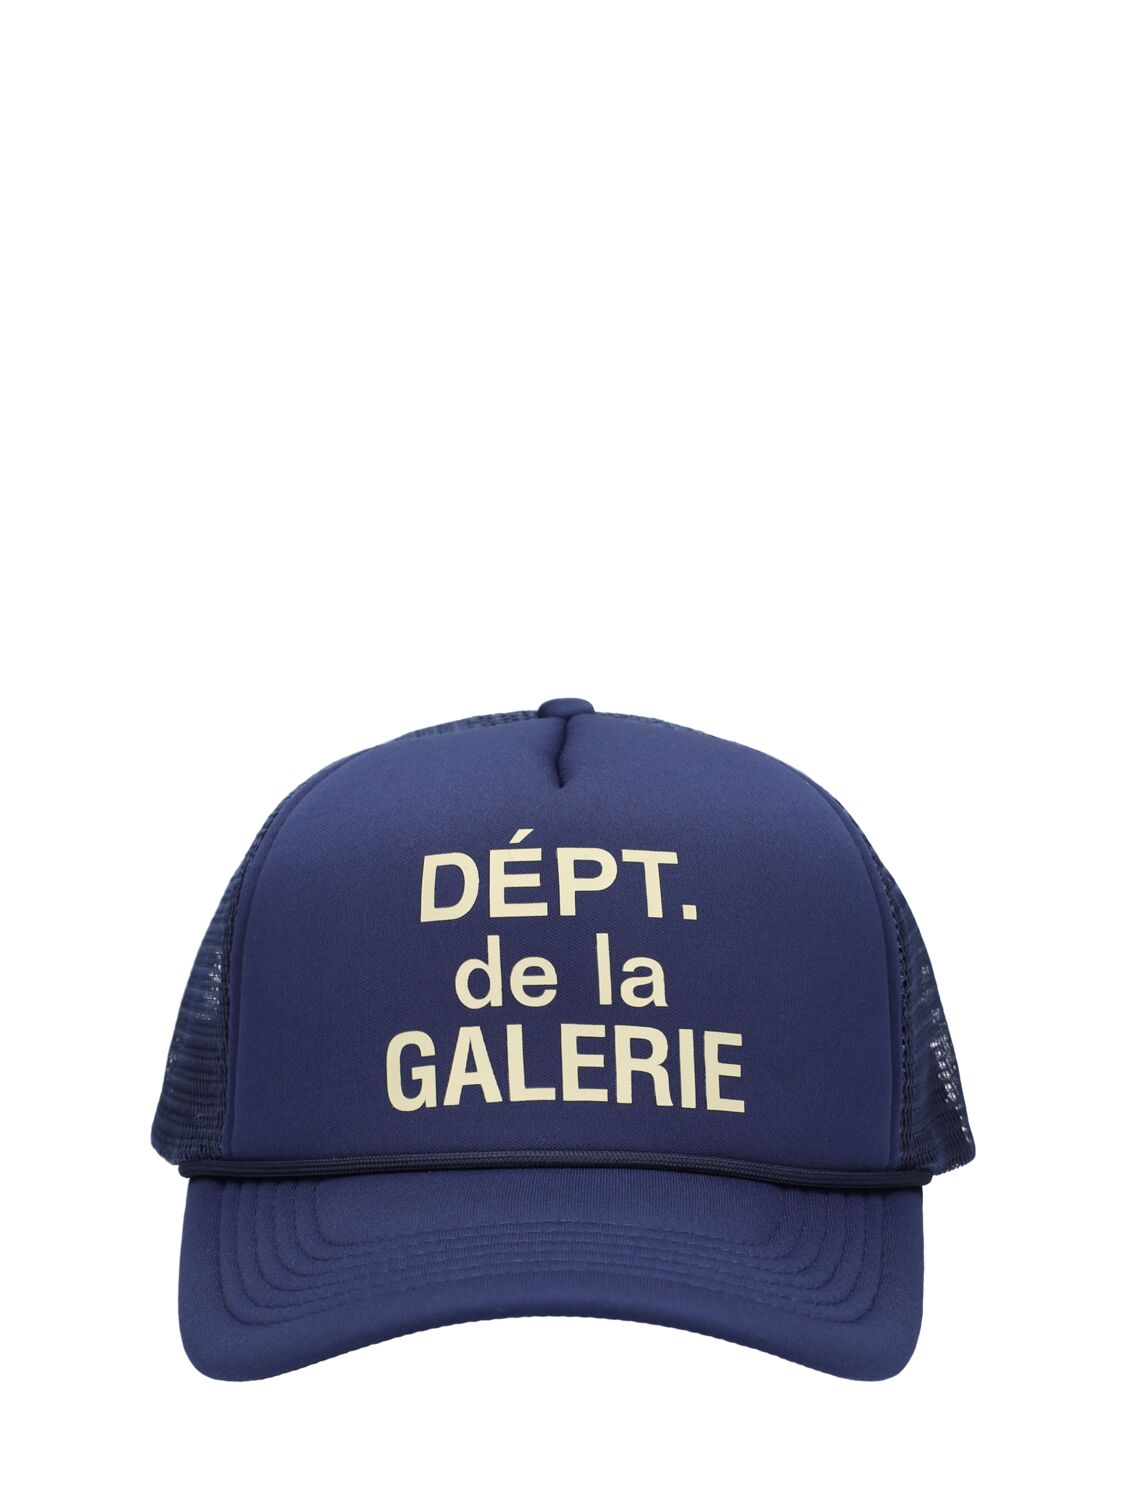 Gallery Dept. French Logo Trucker Hat In Navy